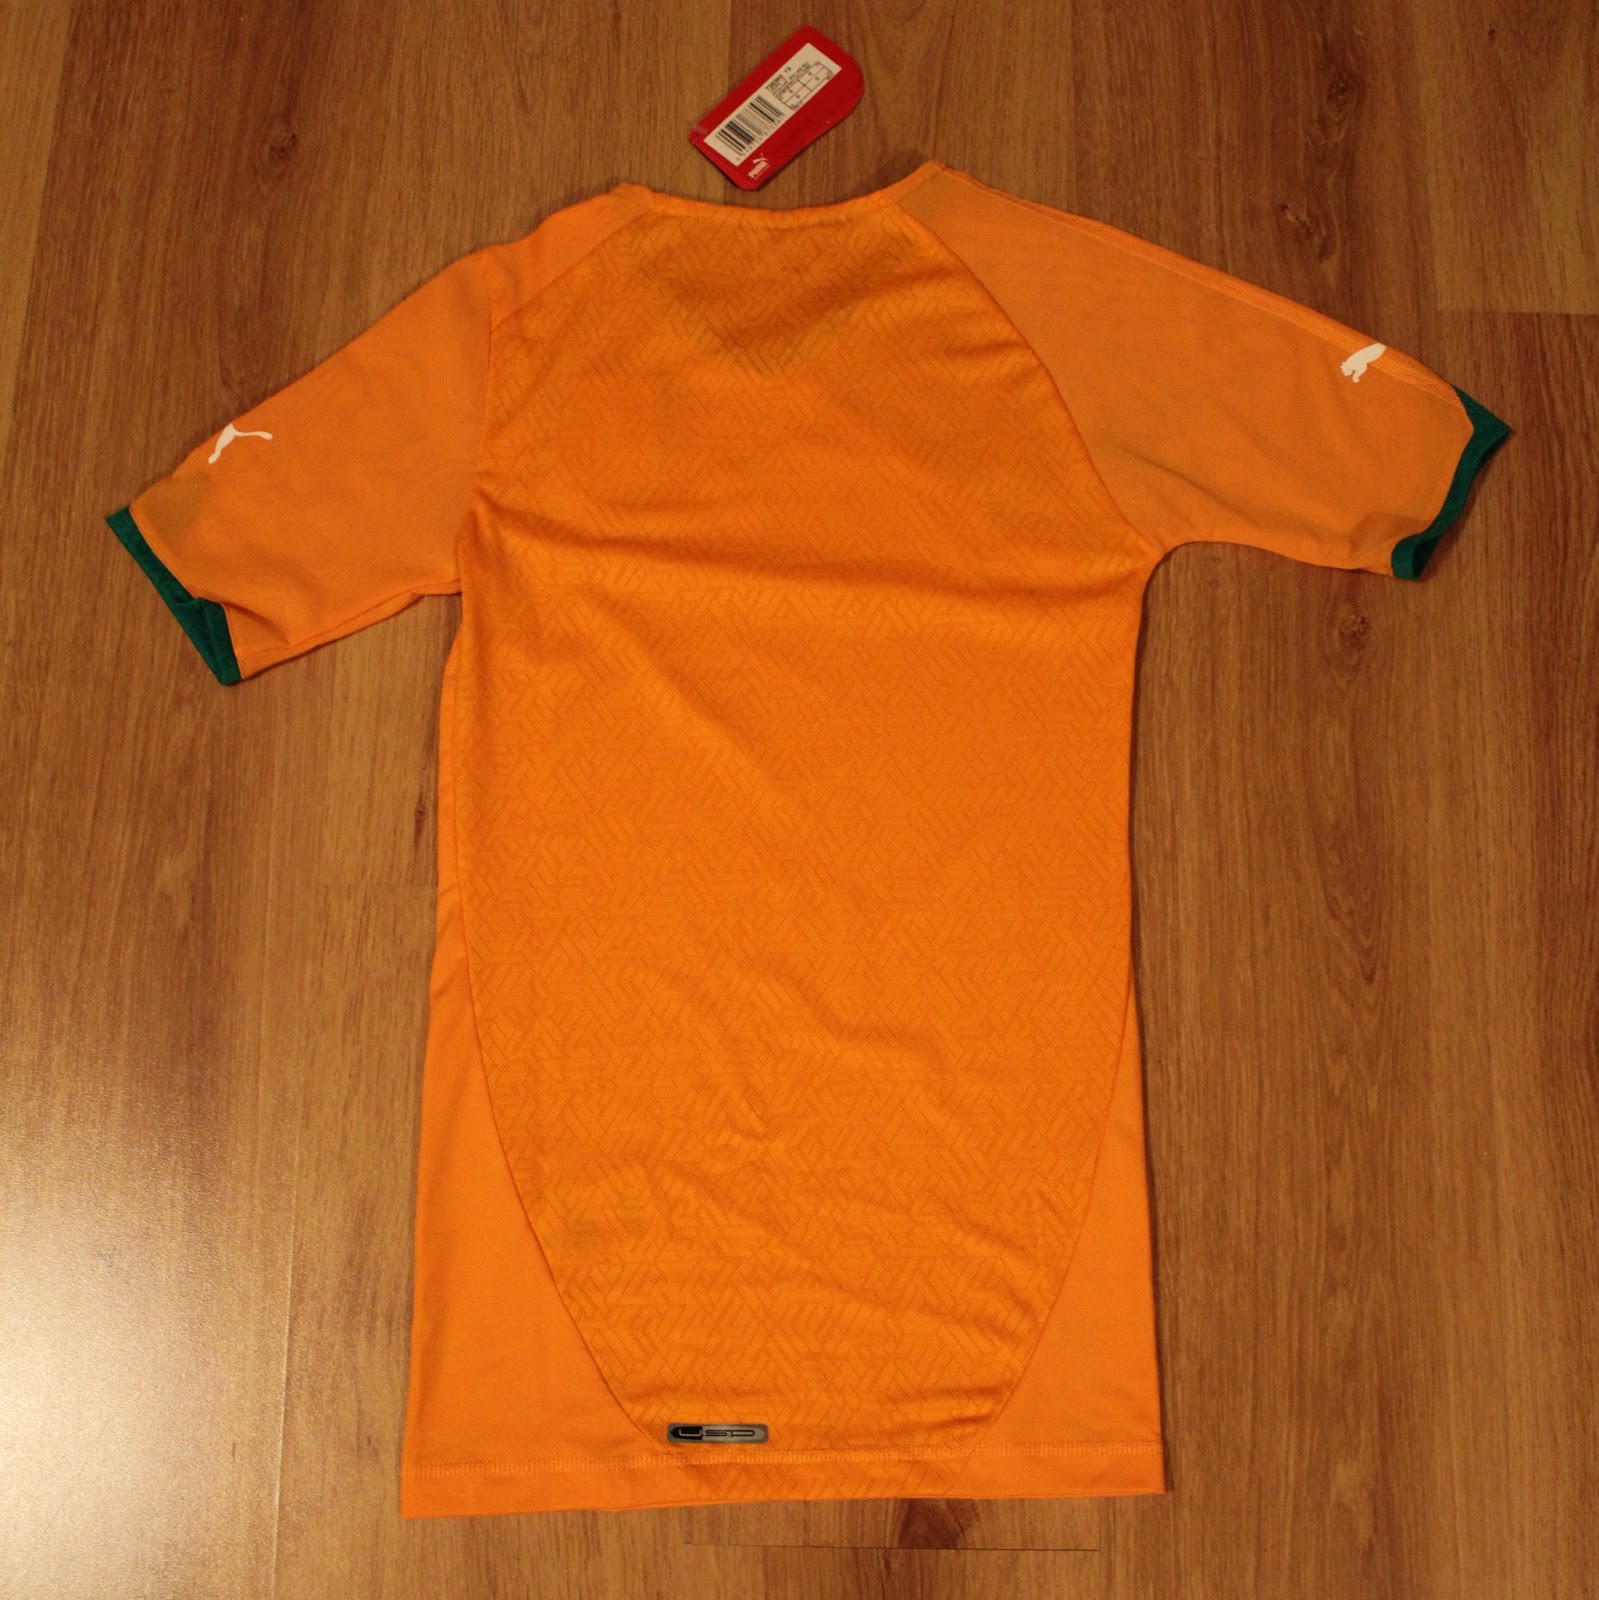 Solana's football shirt collection: Ivory Coast 2010/11 Home Kit 